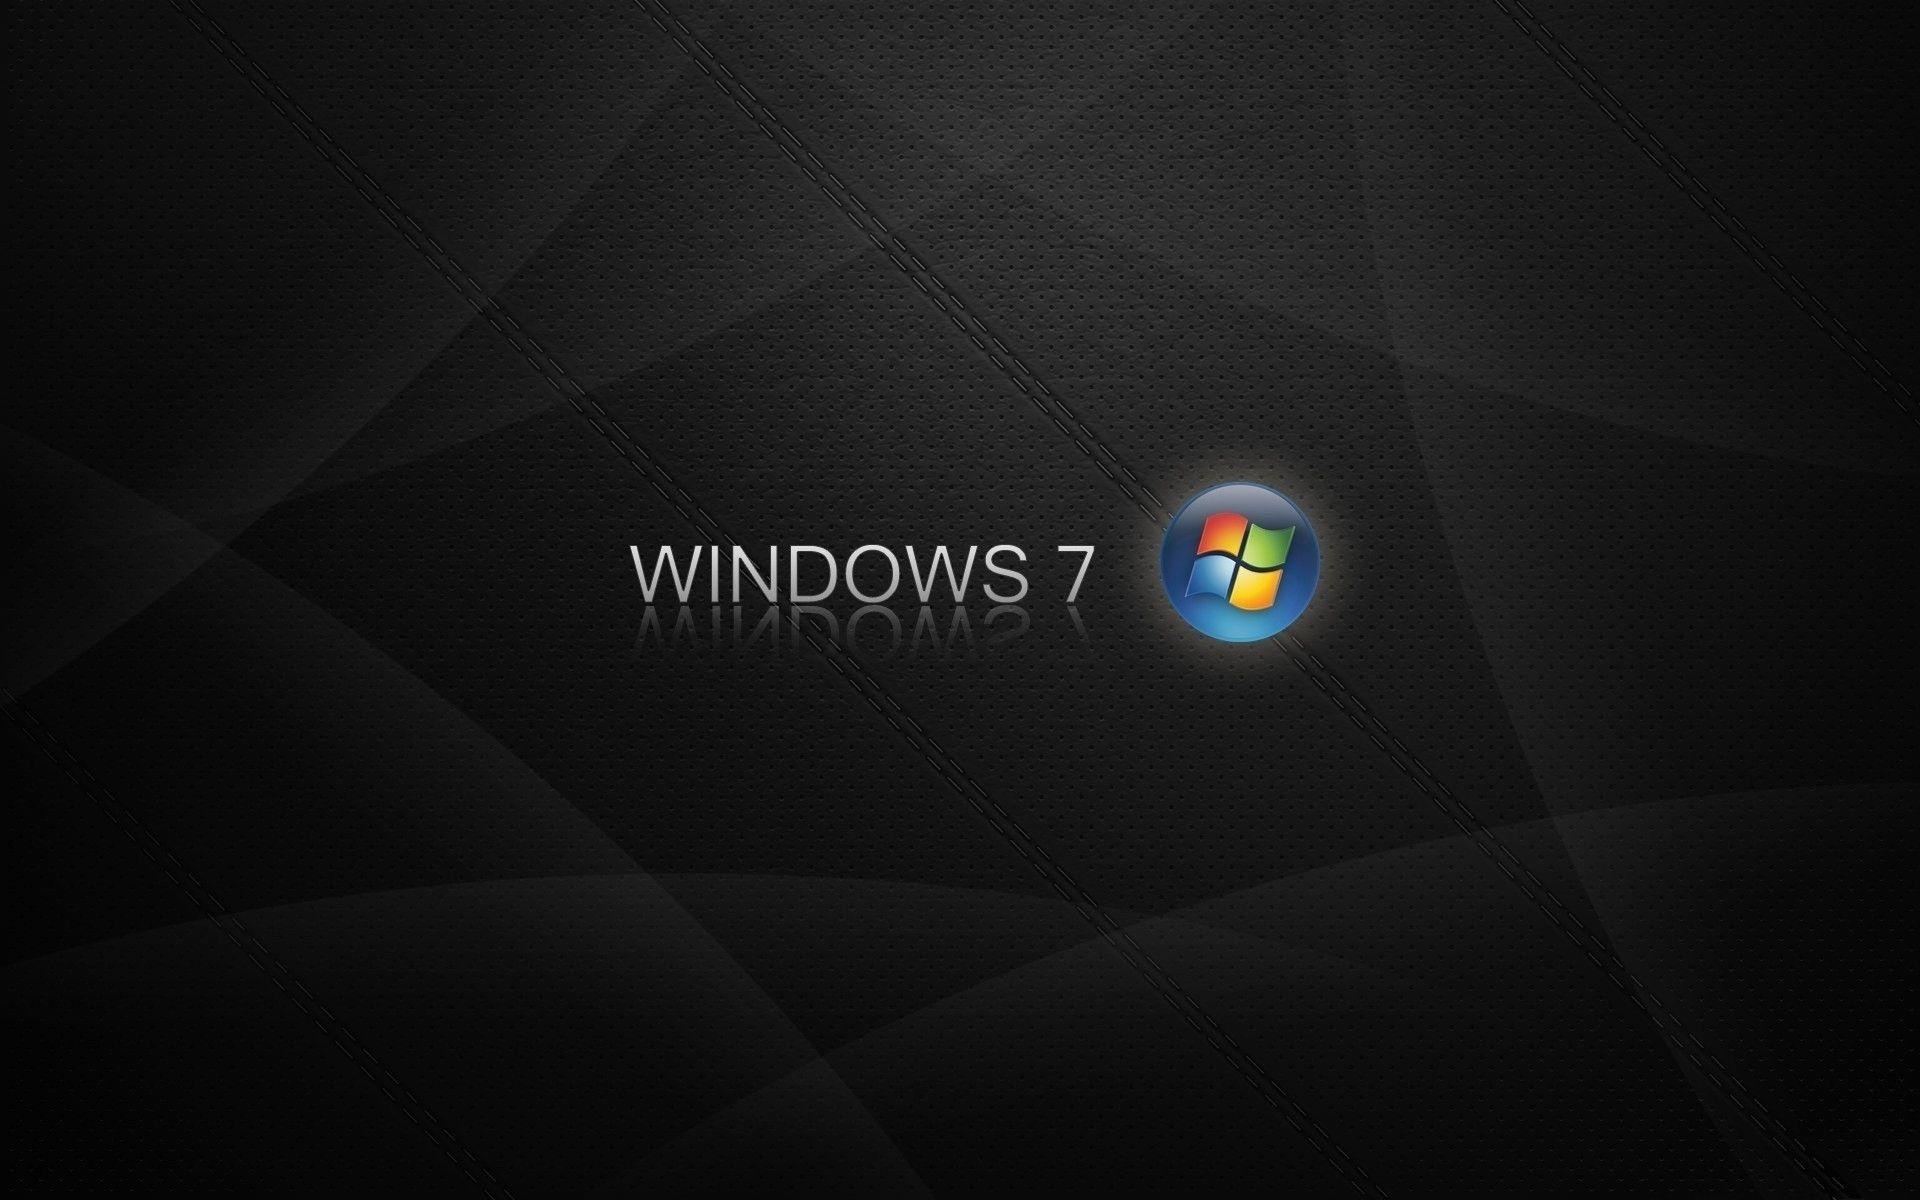 Windows 7 Black (id: 23110)